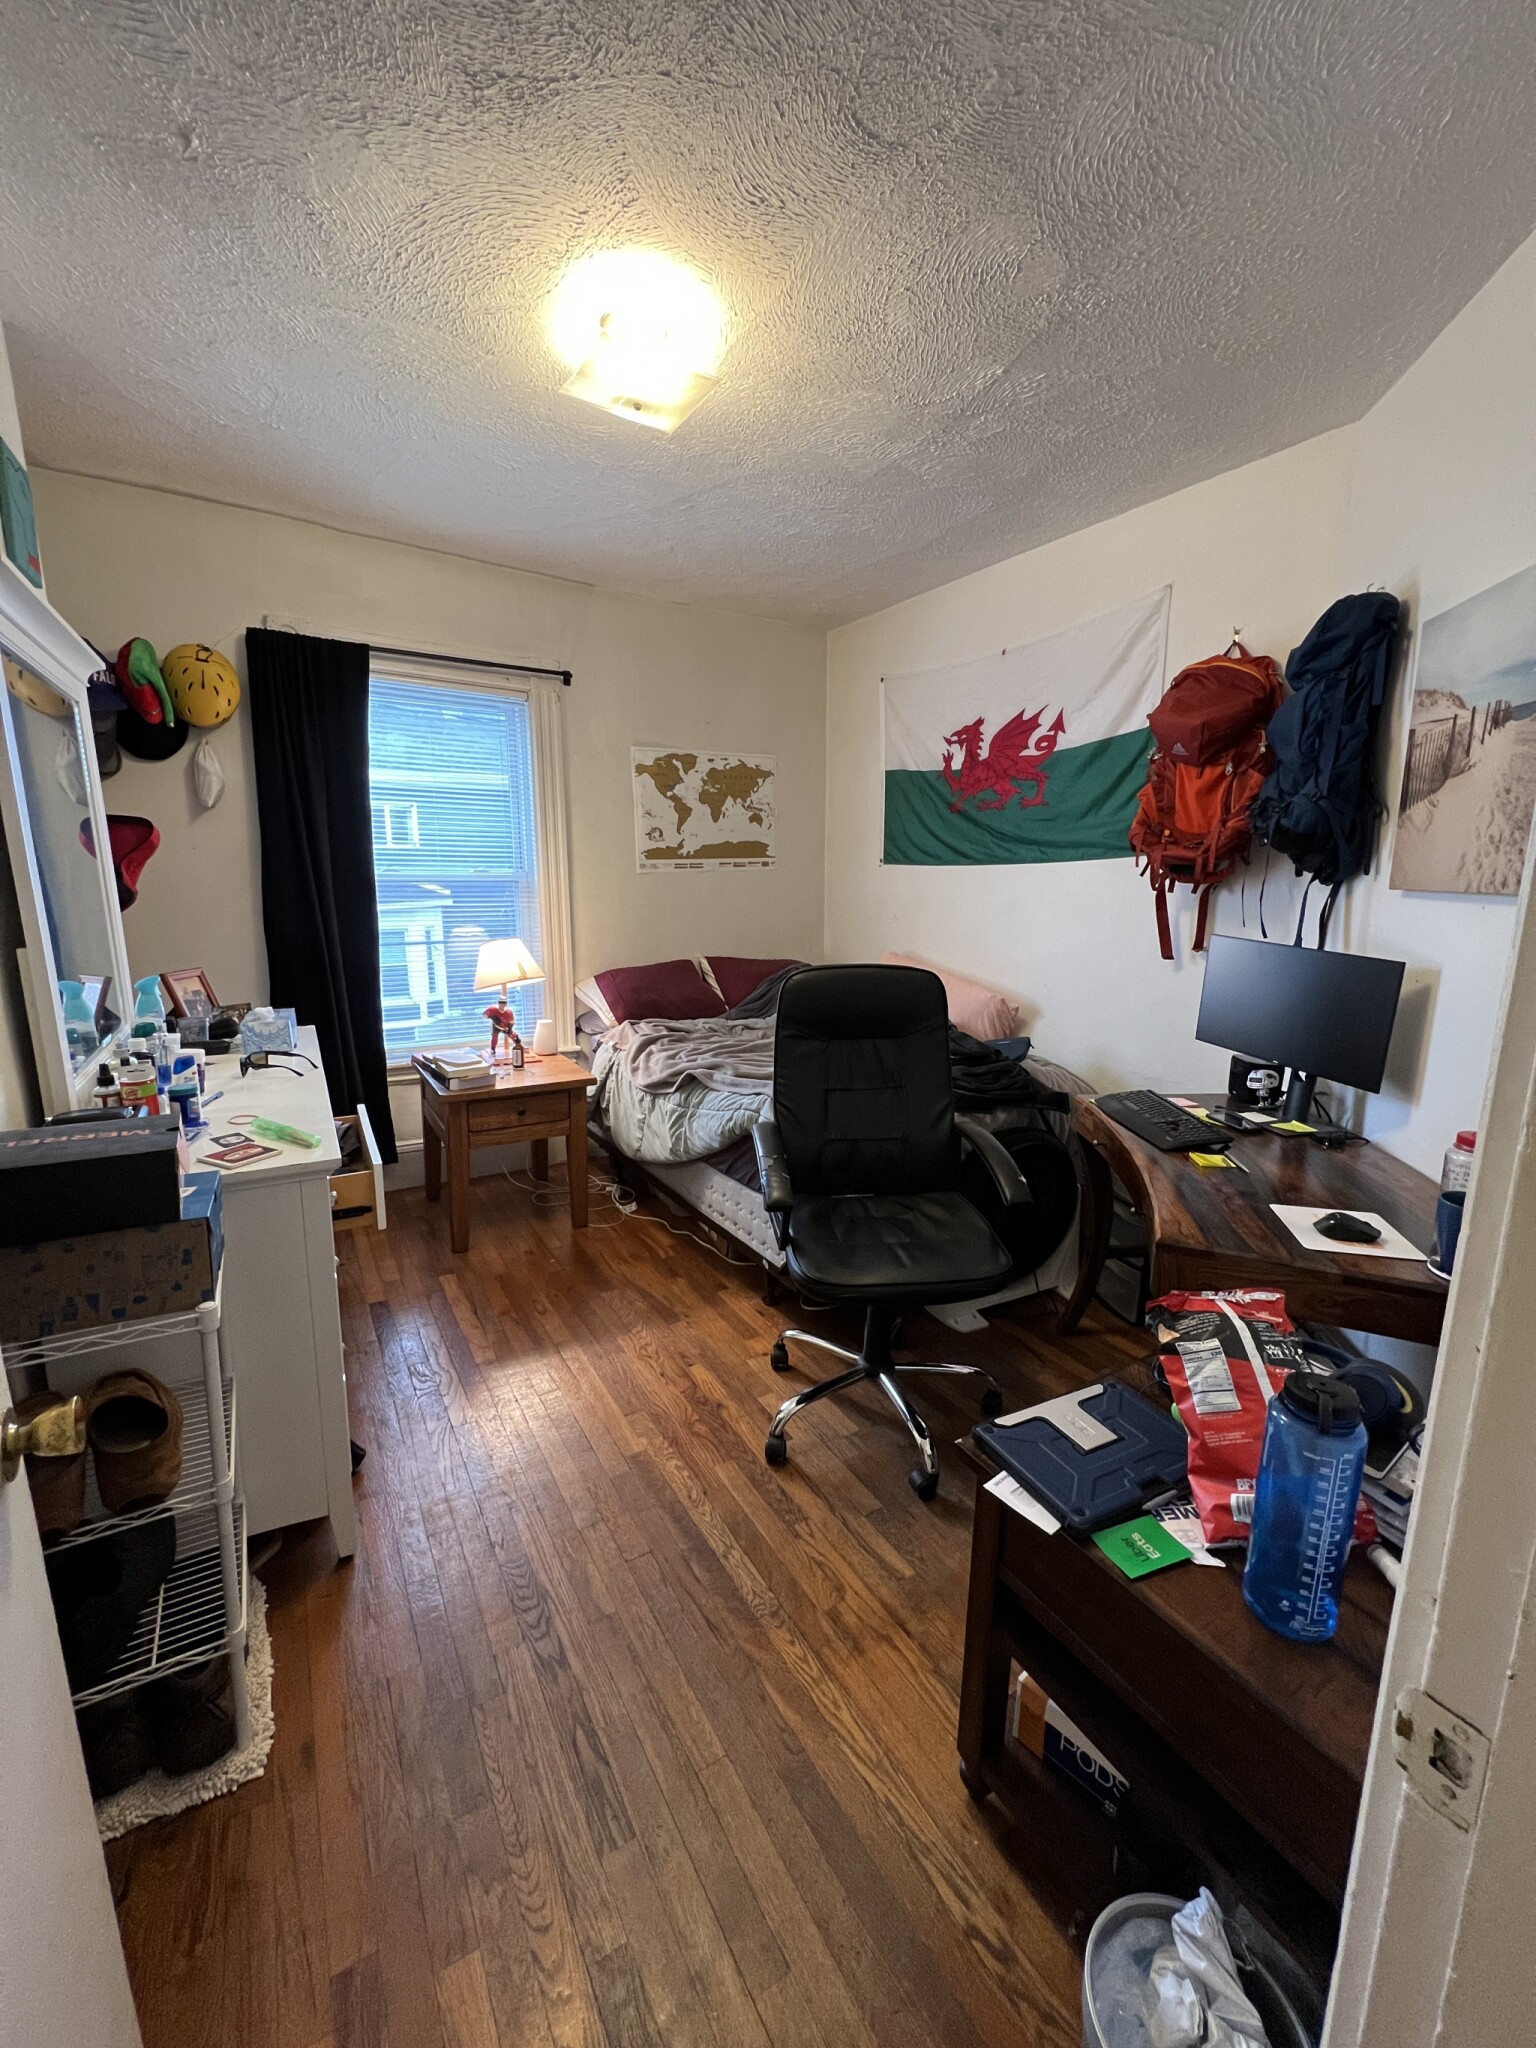 Photos of apartment on Beacon St.,Somerville MA 02143